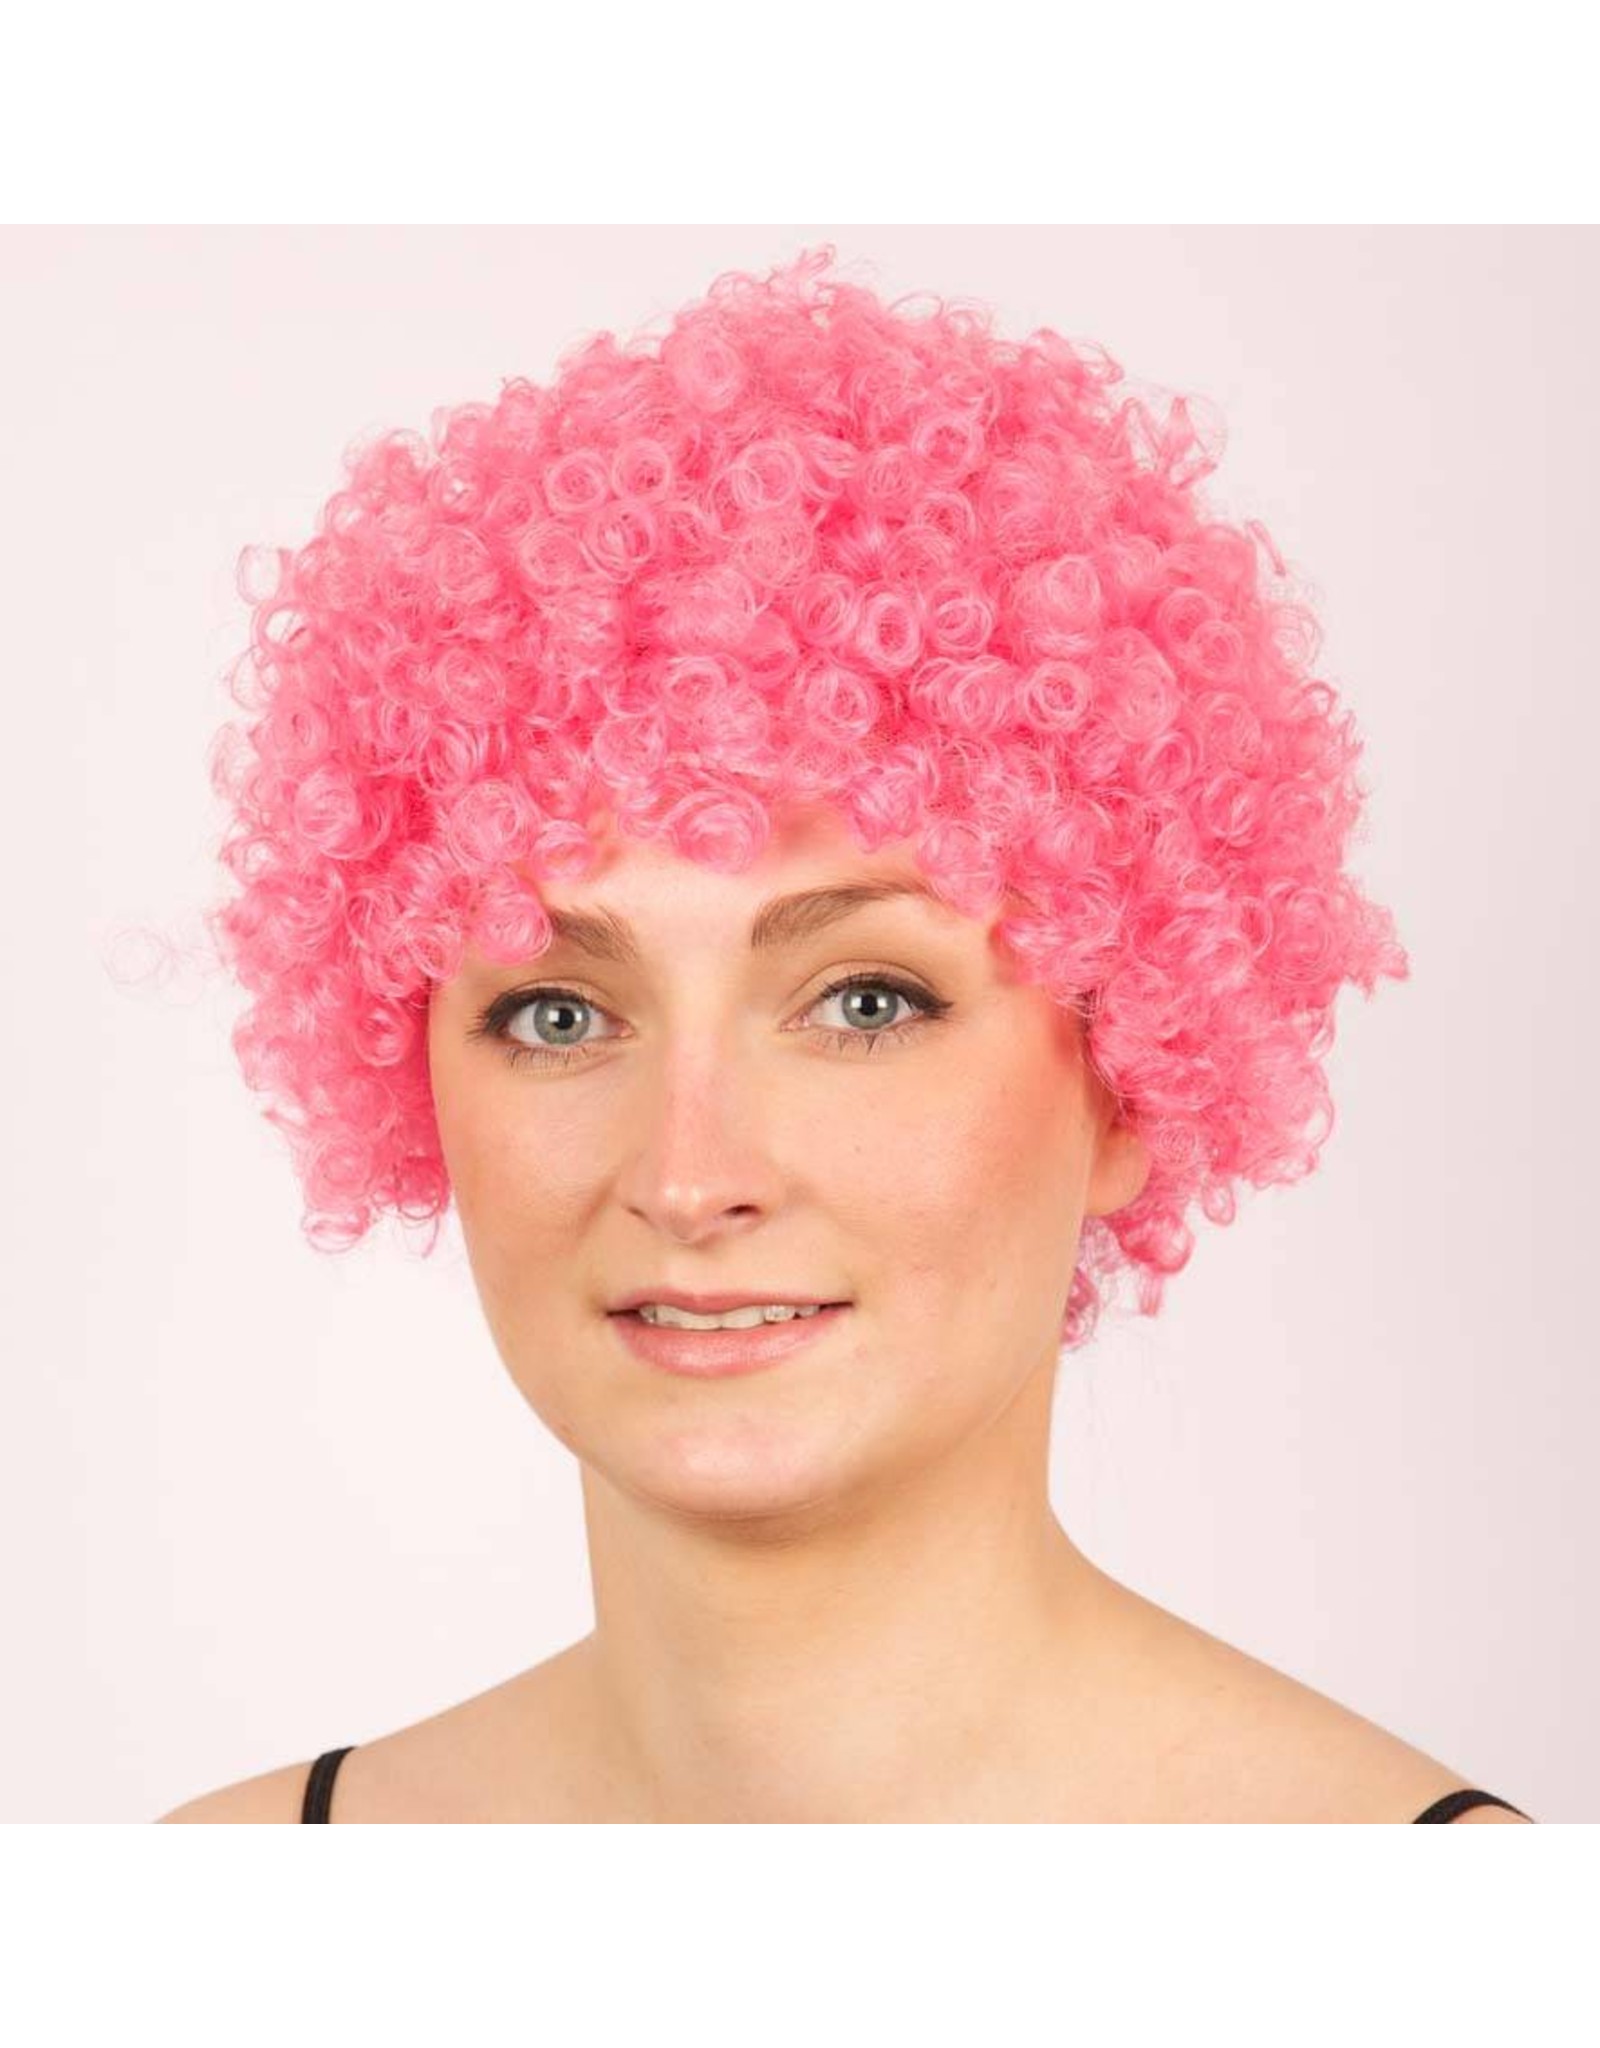 Pruik Hair roze